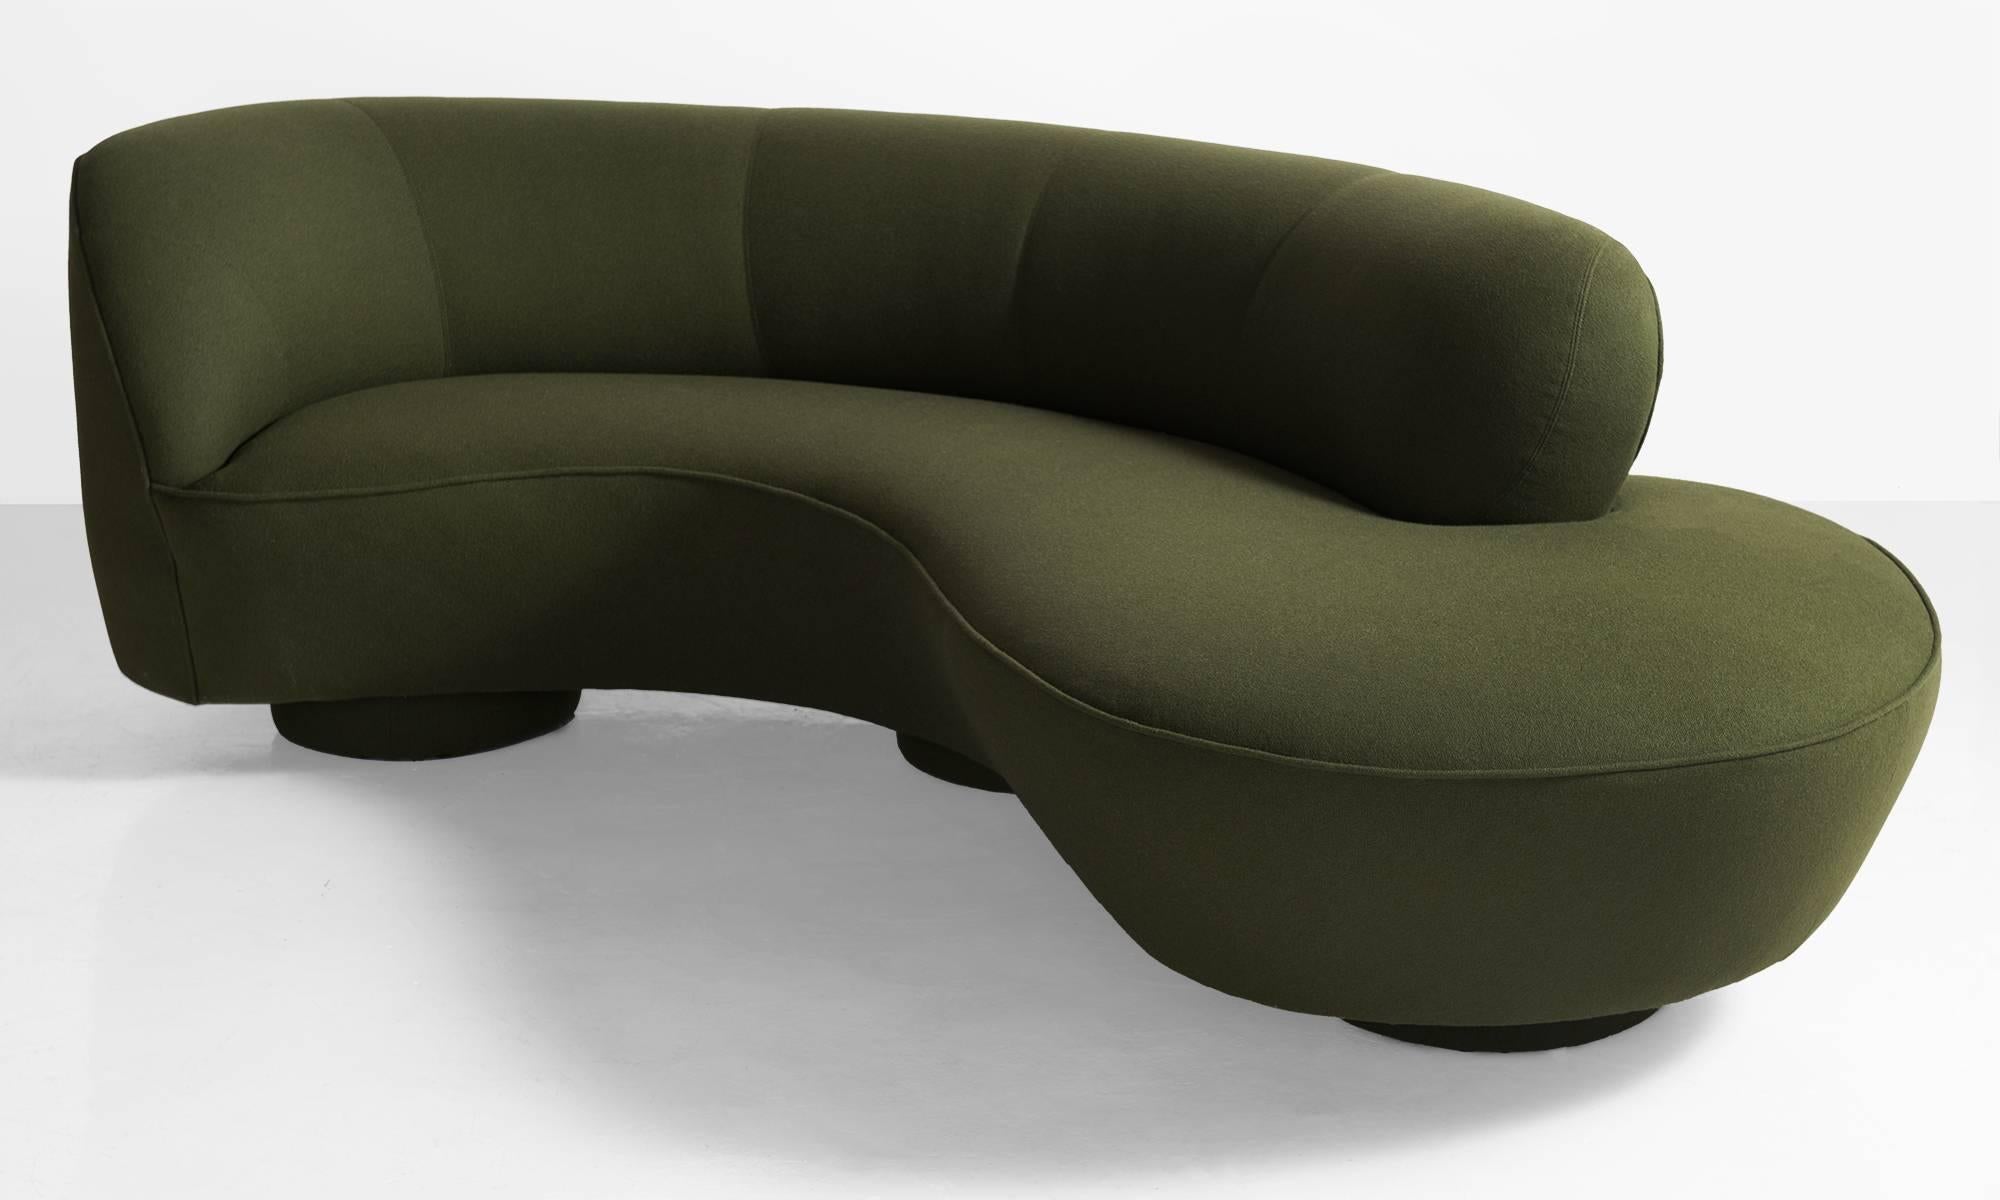 Vladimir Kagan sofa, America, circa 1970.

Designed for Directional. Newly upholstered in Maharam wool fabric.

